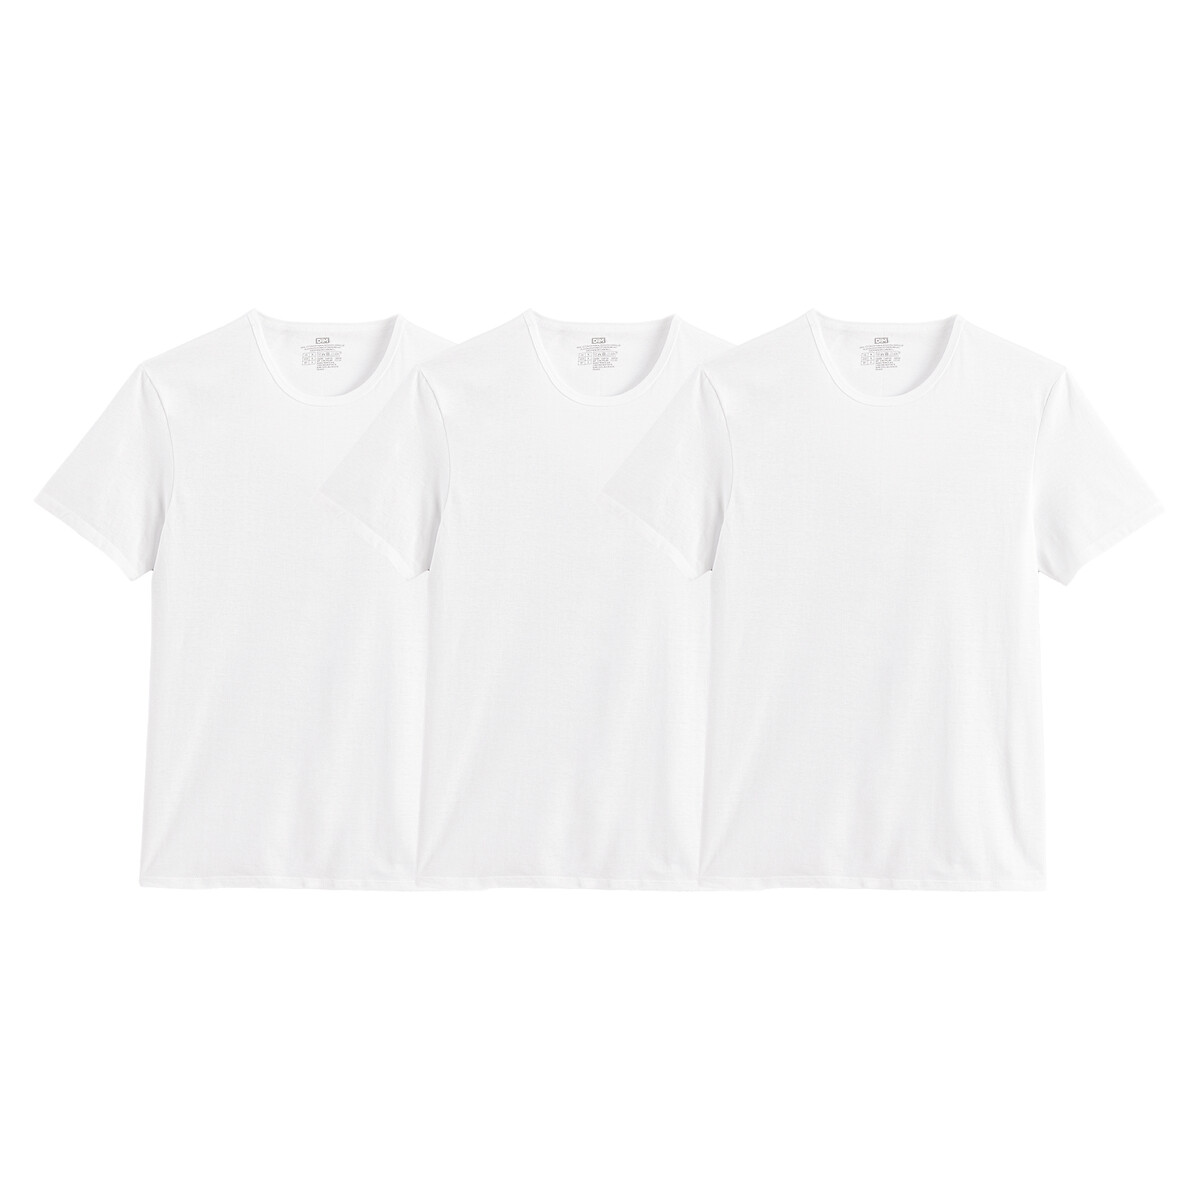 Enfants femmes hommes t-shirt maillot corps 100% coton t-shirts 104-xxl Neuf 